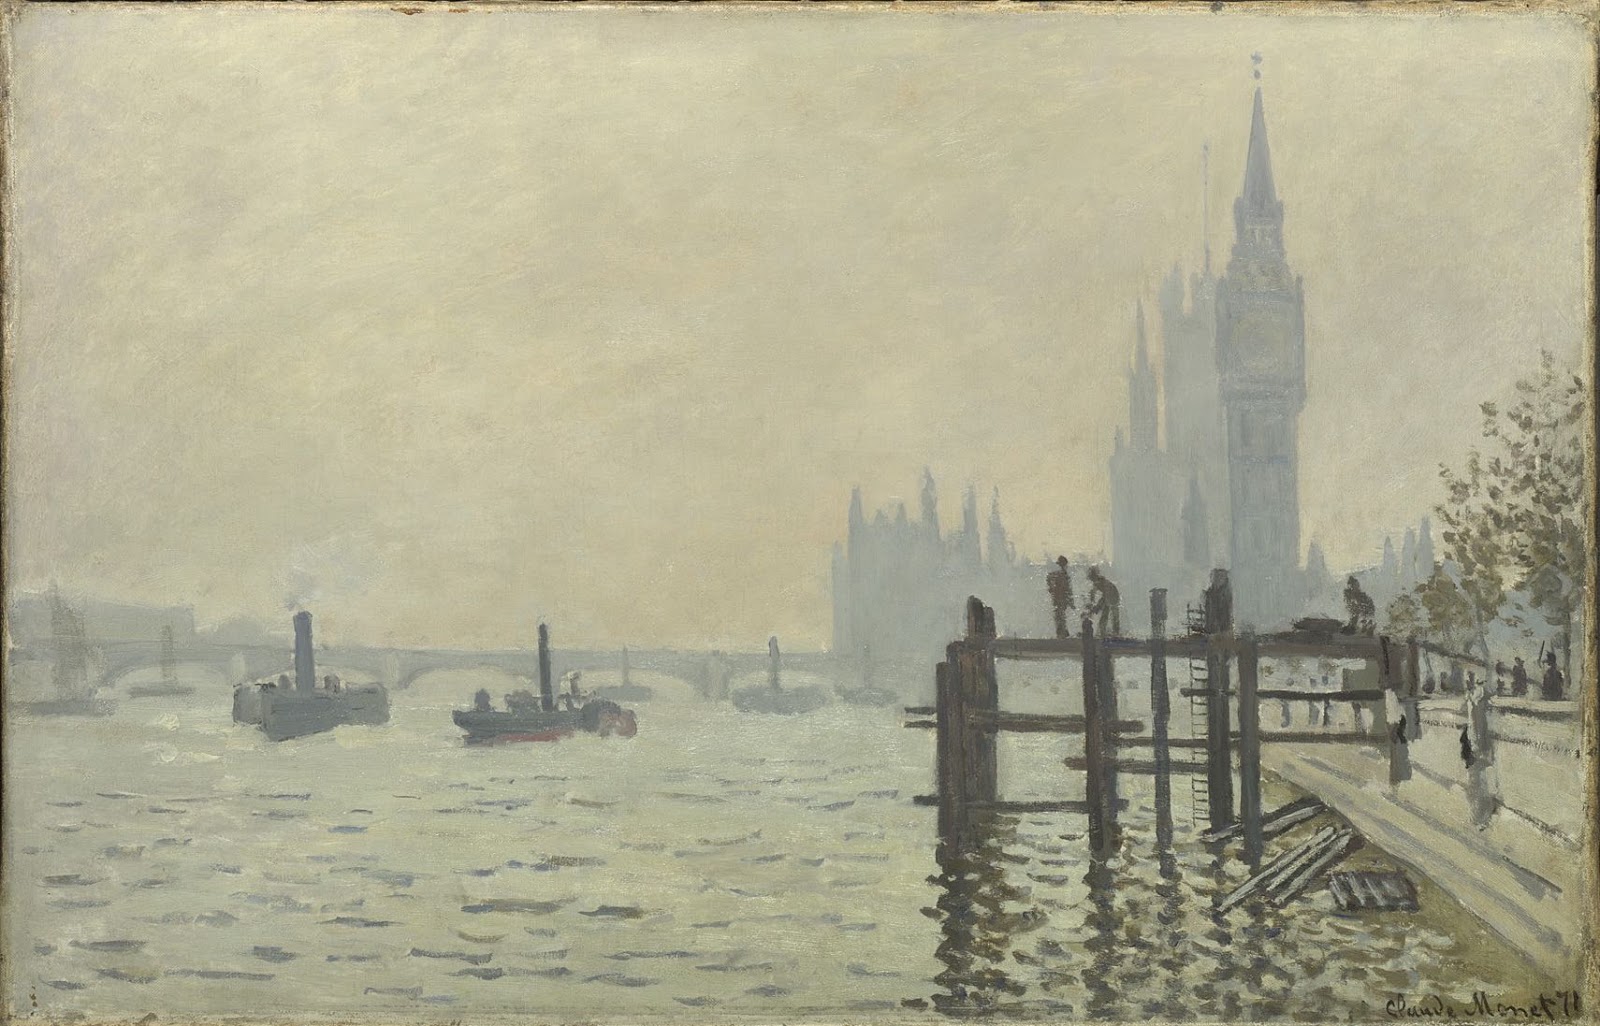 Claude+Monet-1840-1926 (324).jpg